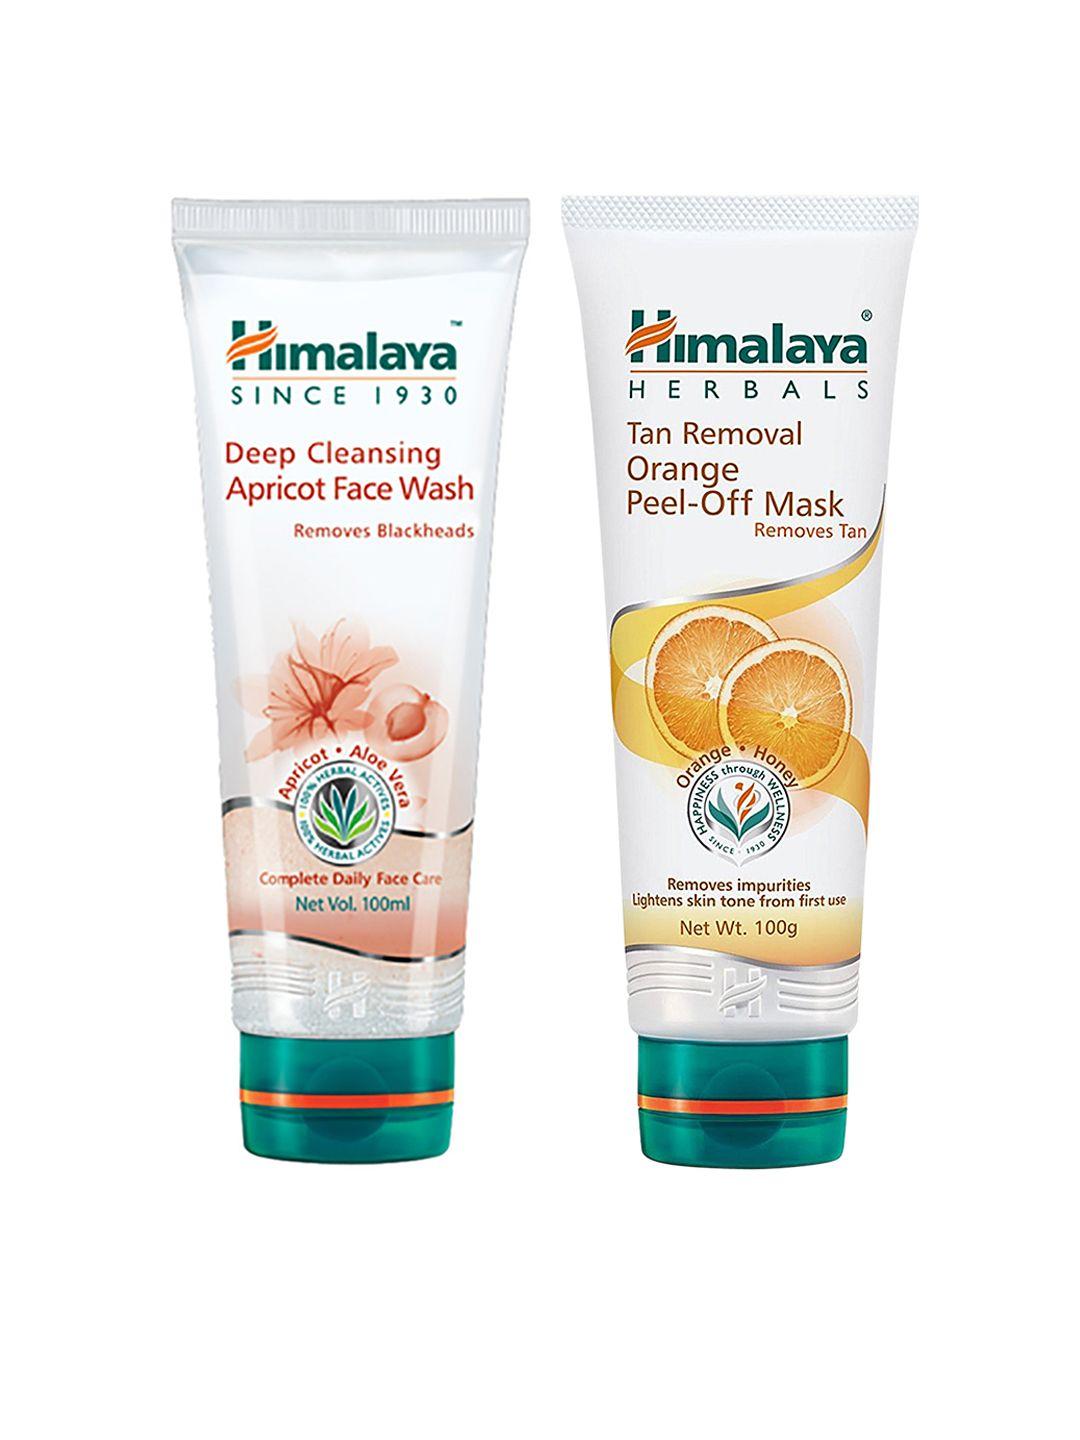 himalaya set of deep cleansing apricot face wash & tan removal orange peel-off mask